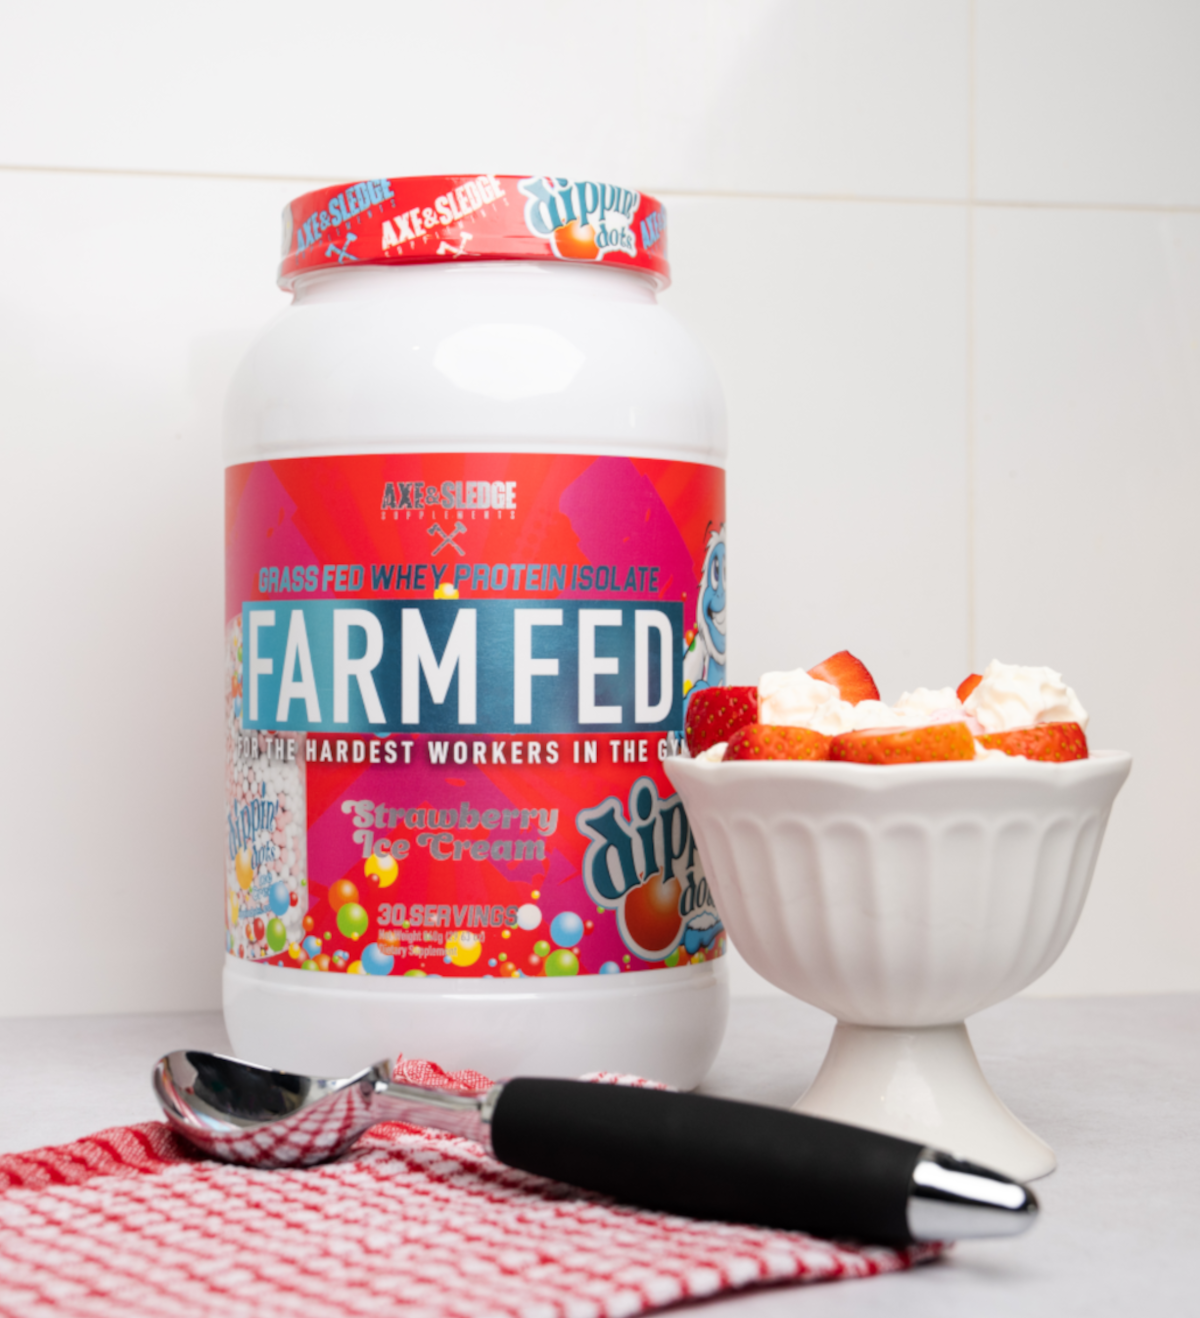 FARM FED // Grass-Fed Whey Protein Isolate - Axe & Sledge Supplements